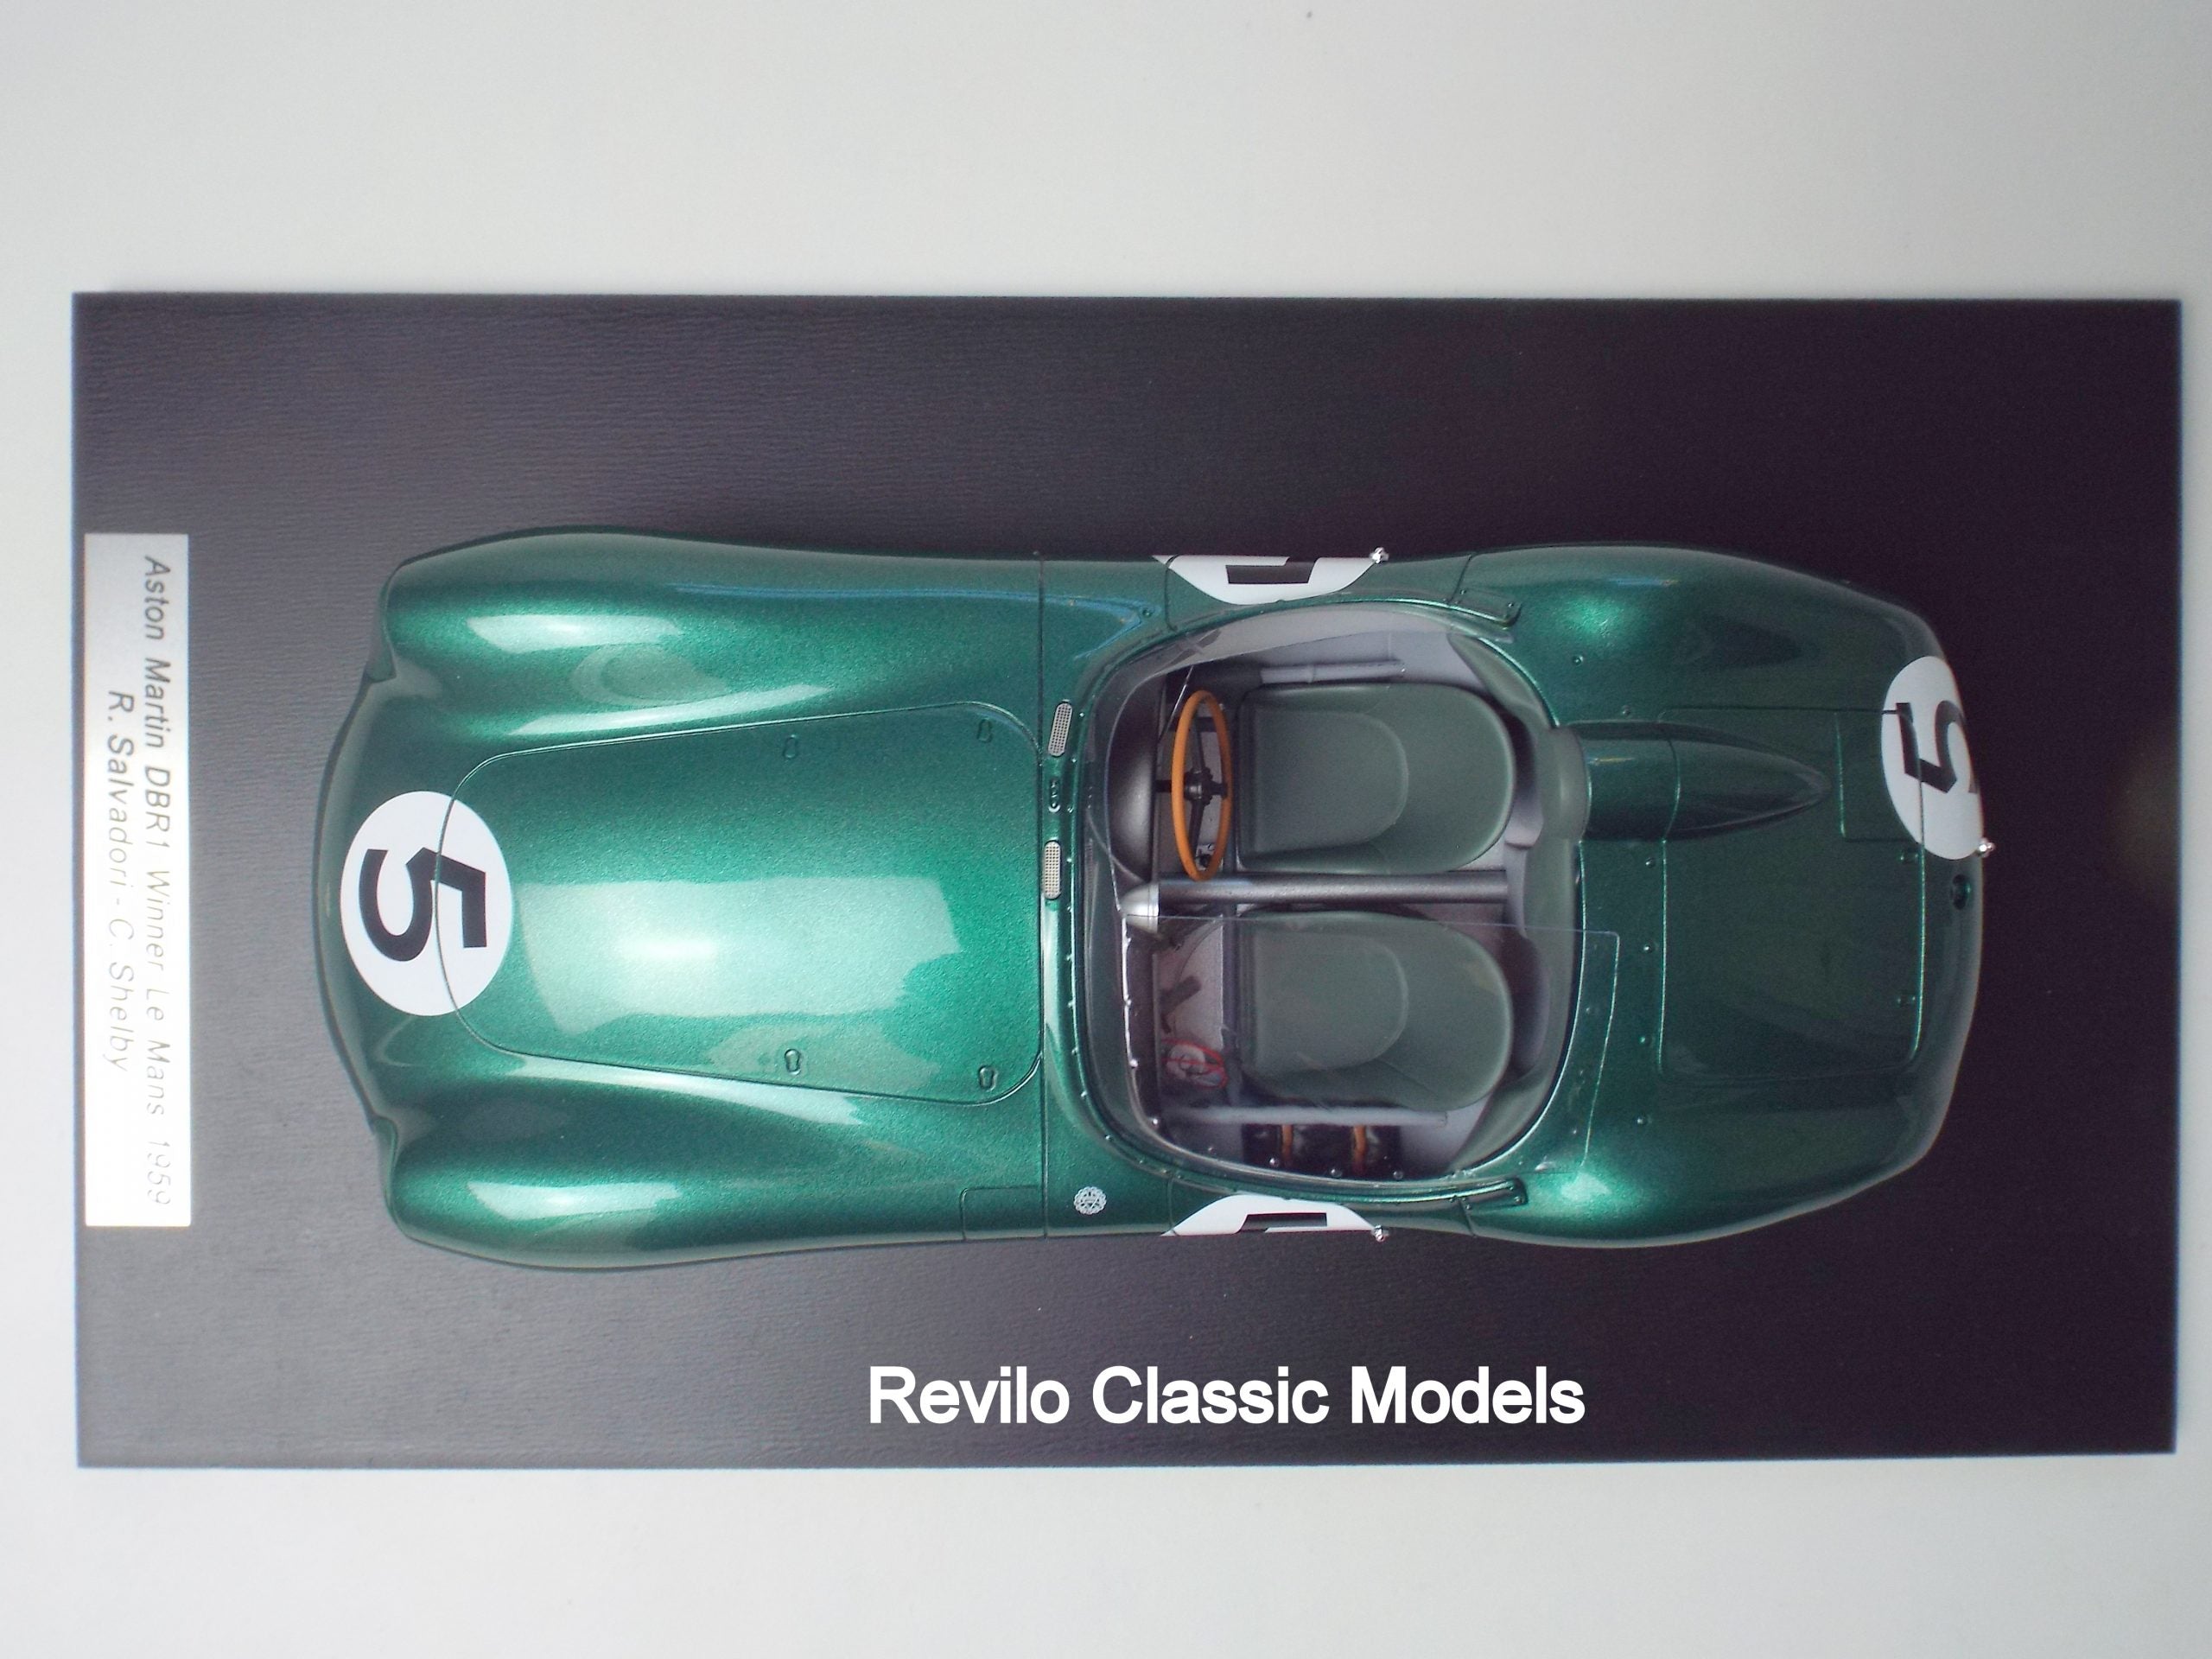 Aston Martin DBR1 Le Mans winner 1959 1:18 scale